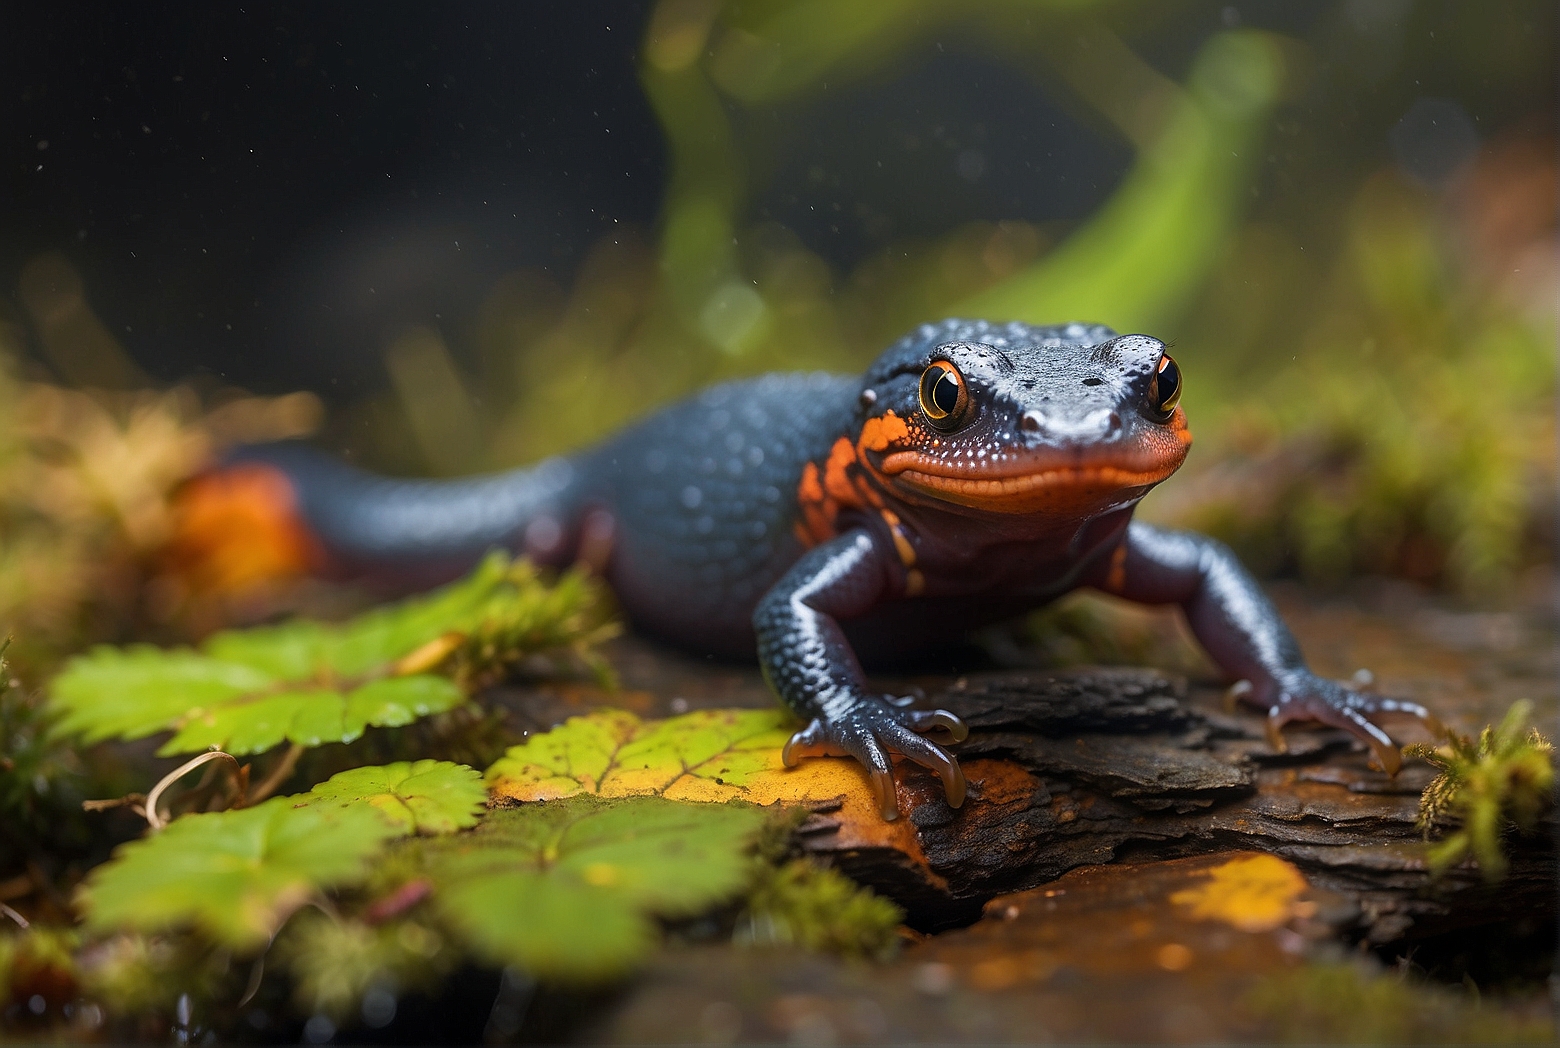 Basic Needs for Salamanders